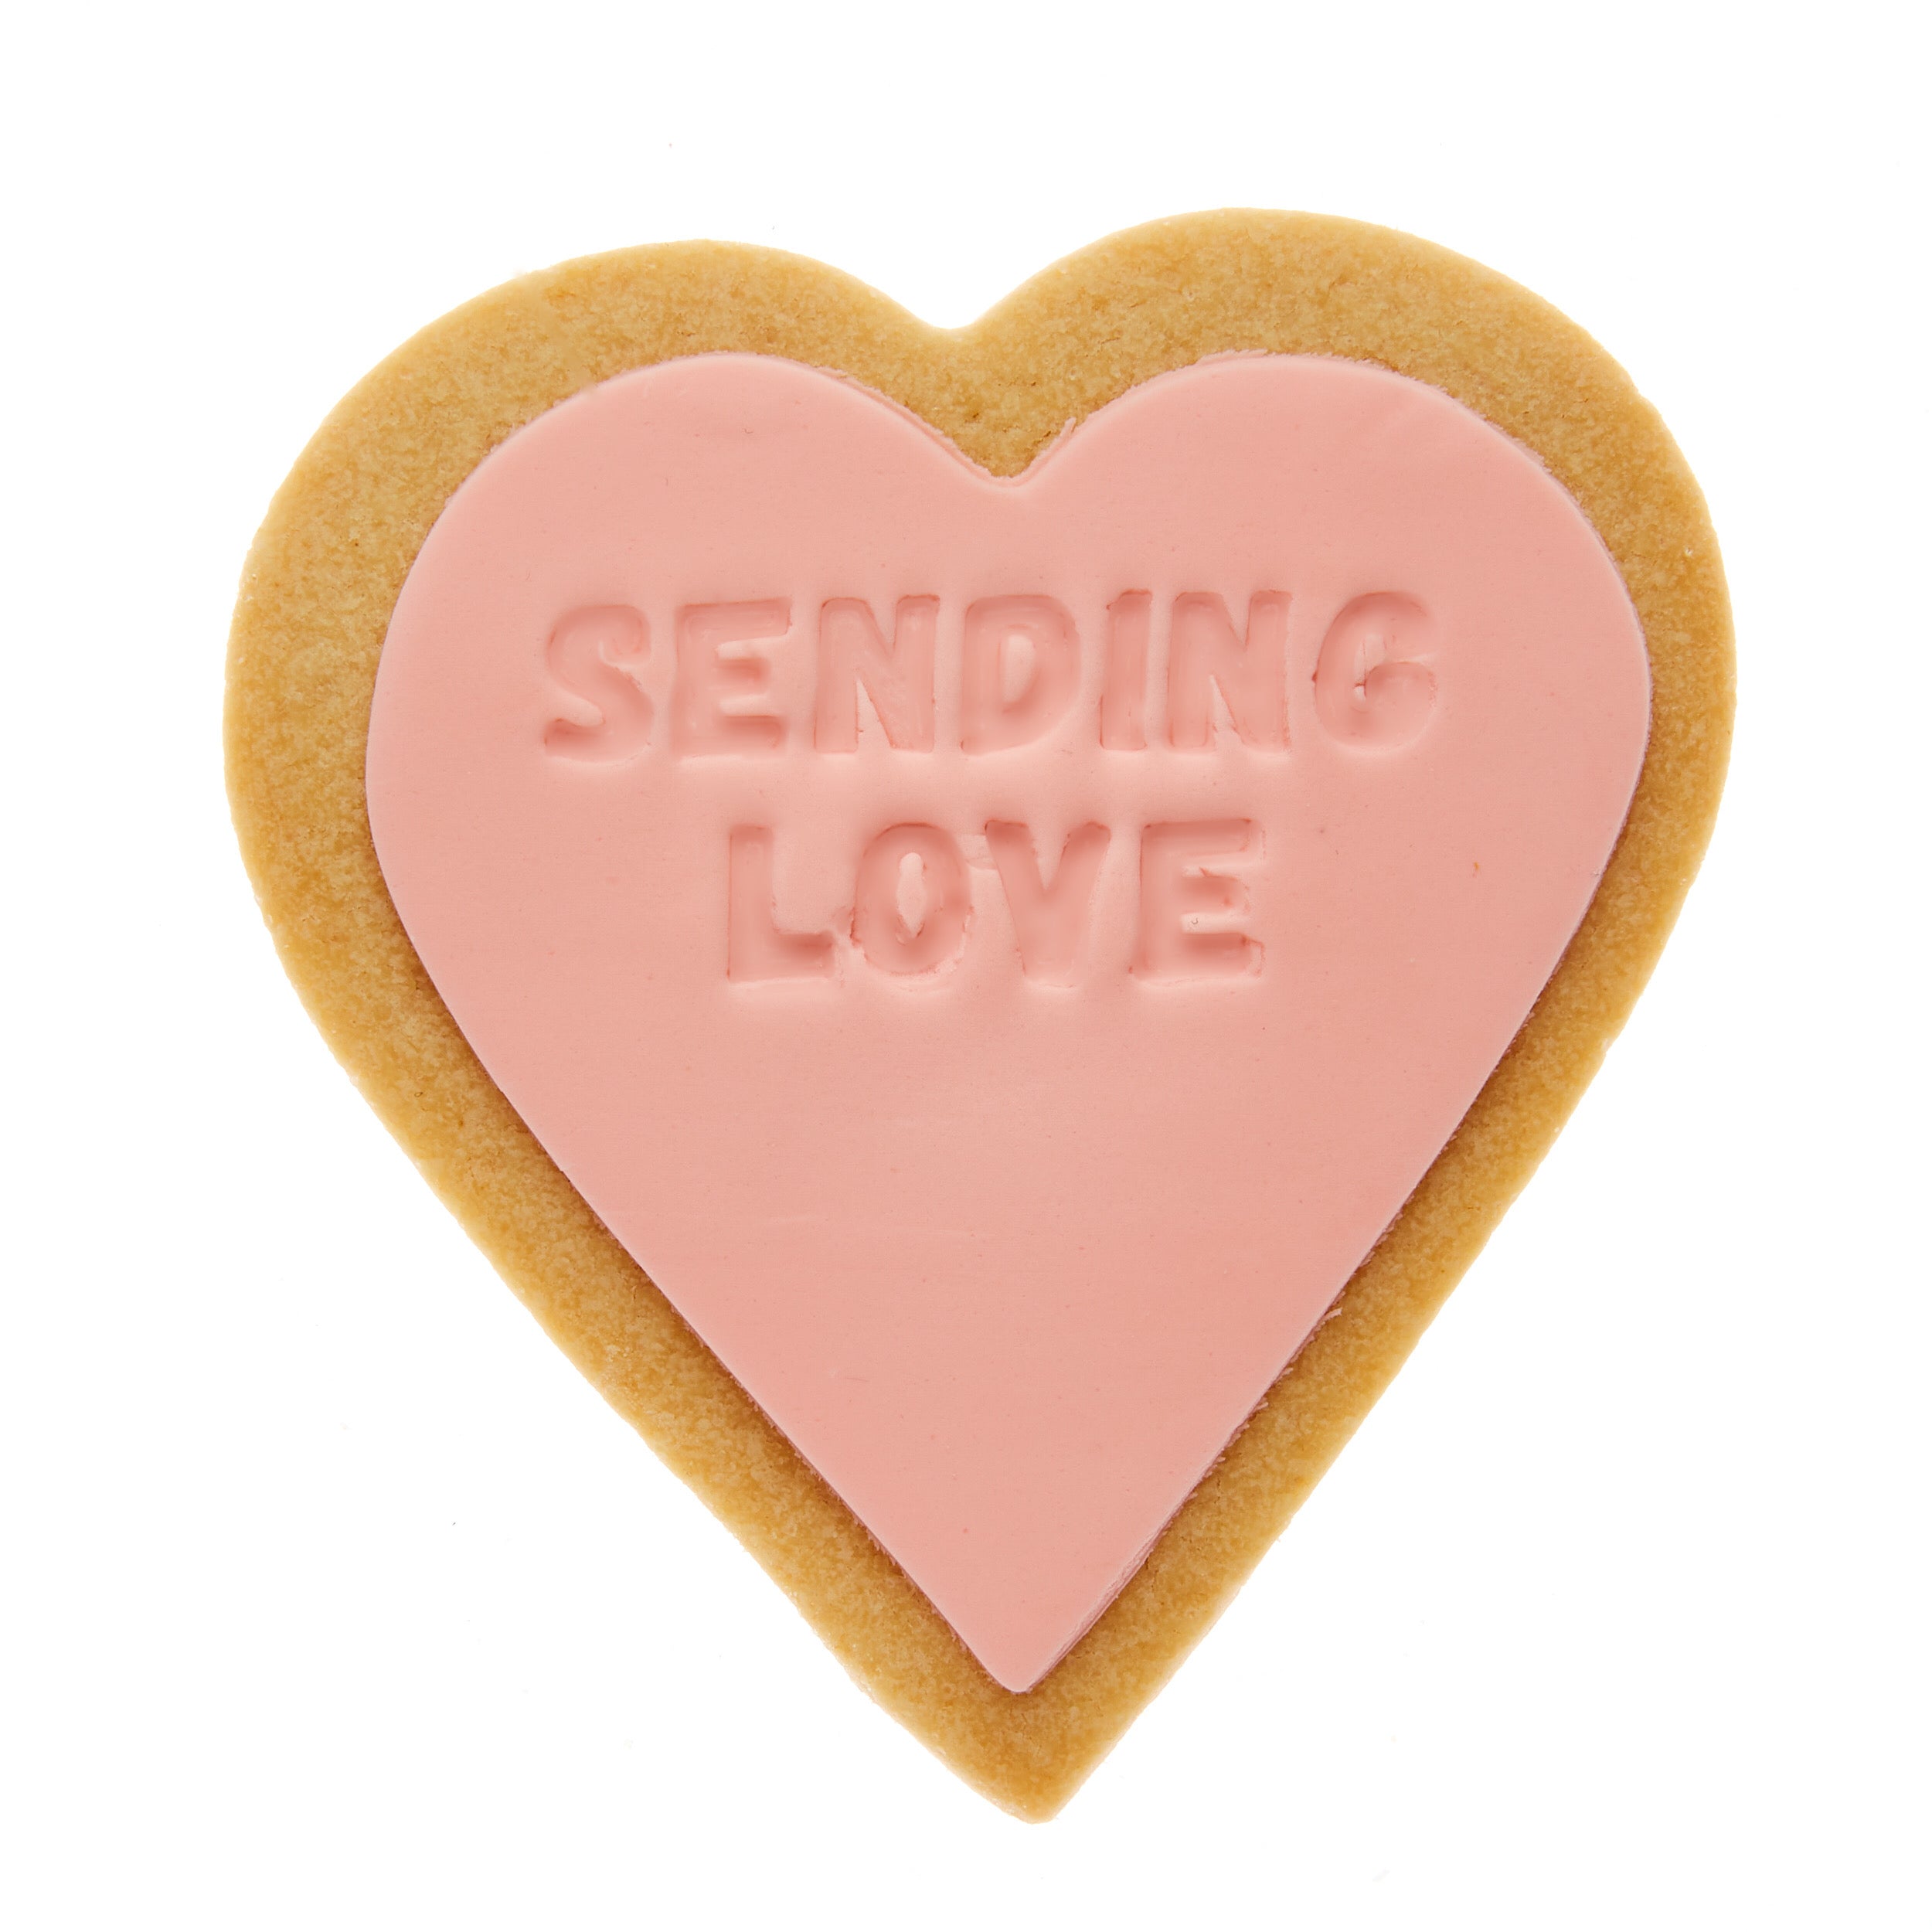 Sending Love + Chocolate